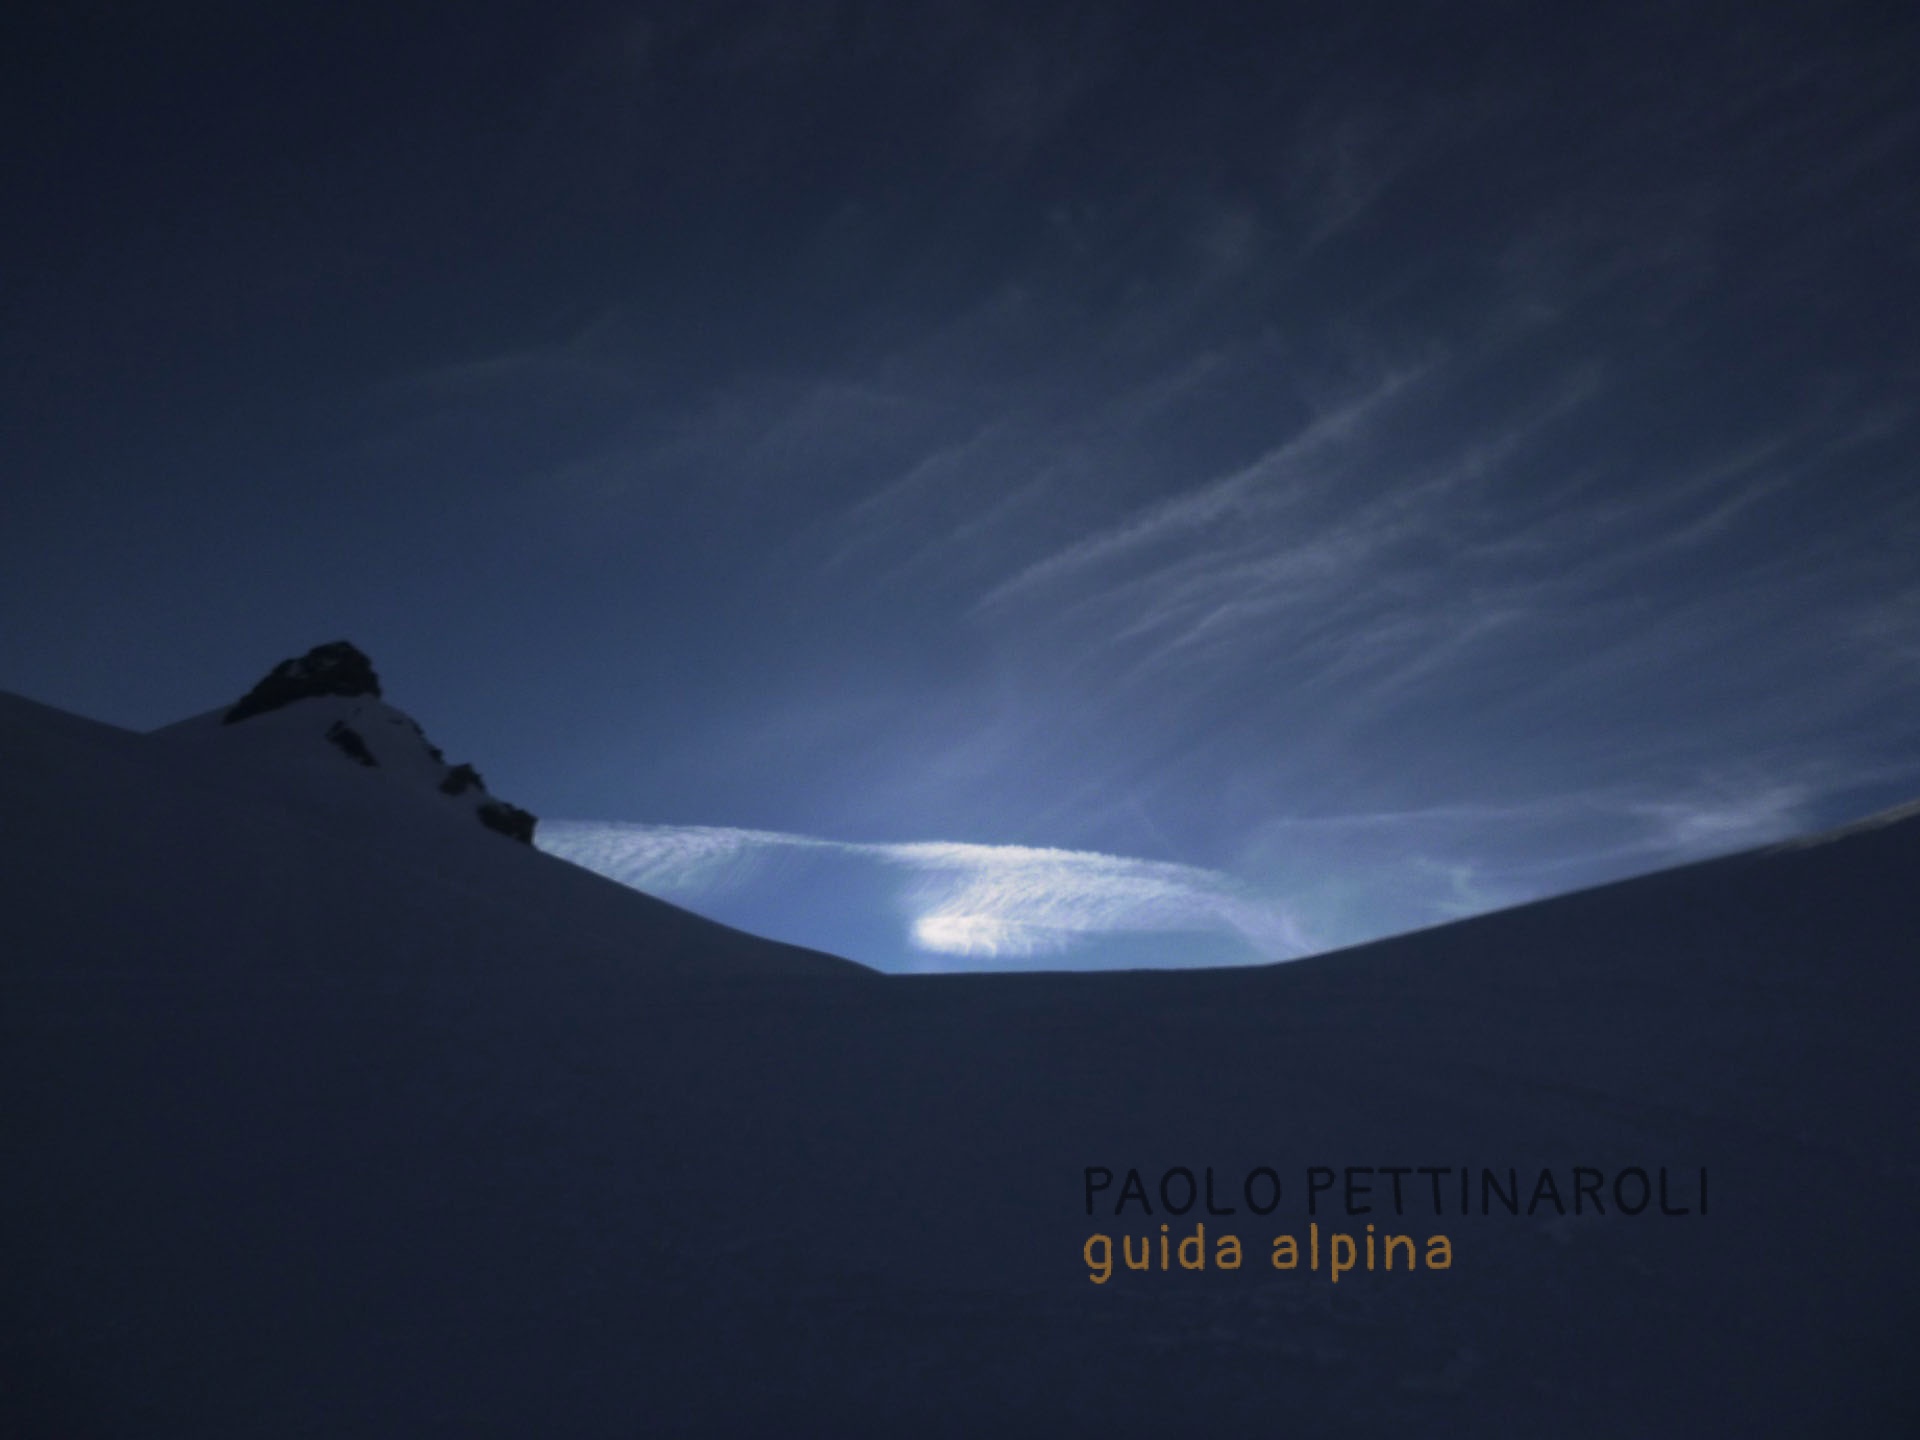 P1030701-panorami_paolo pettinaroli guida alpina